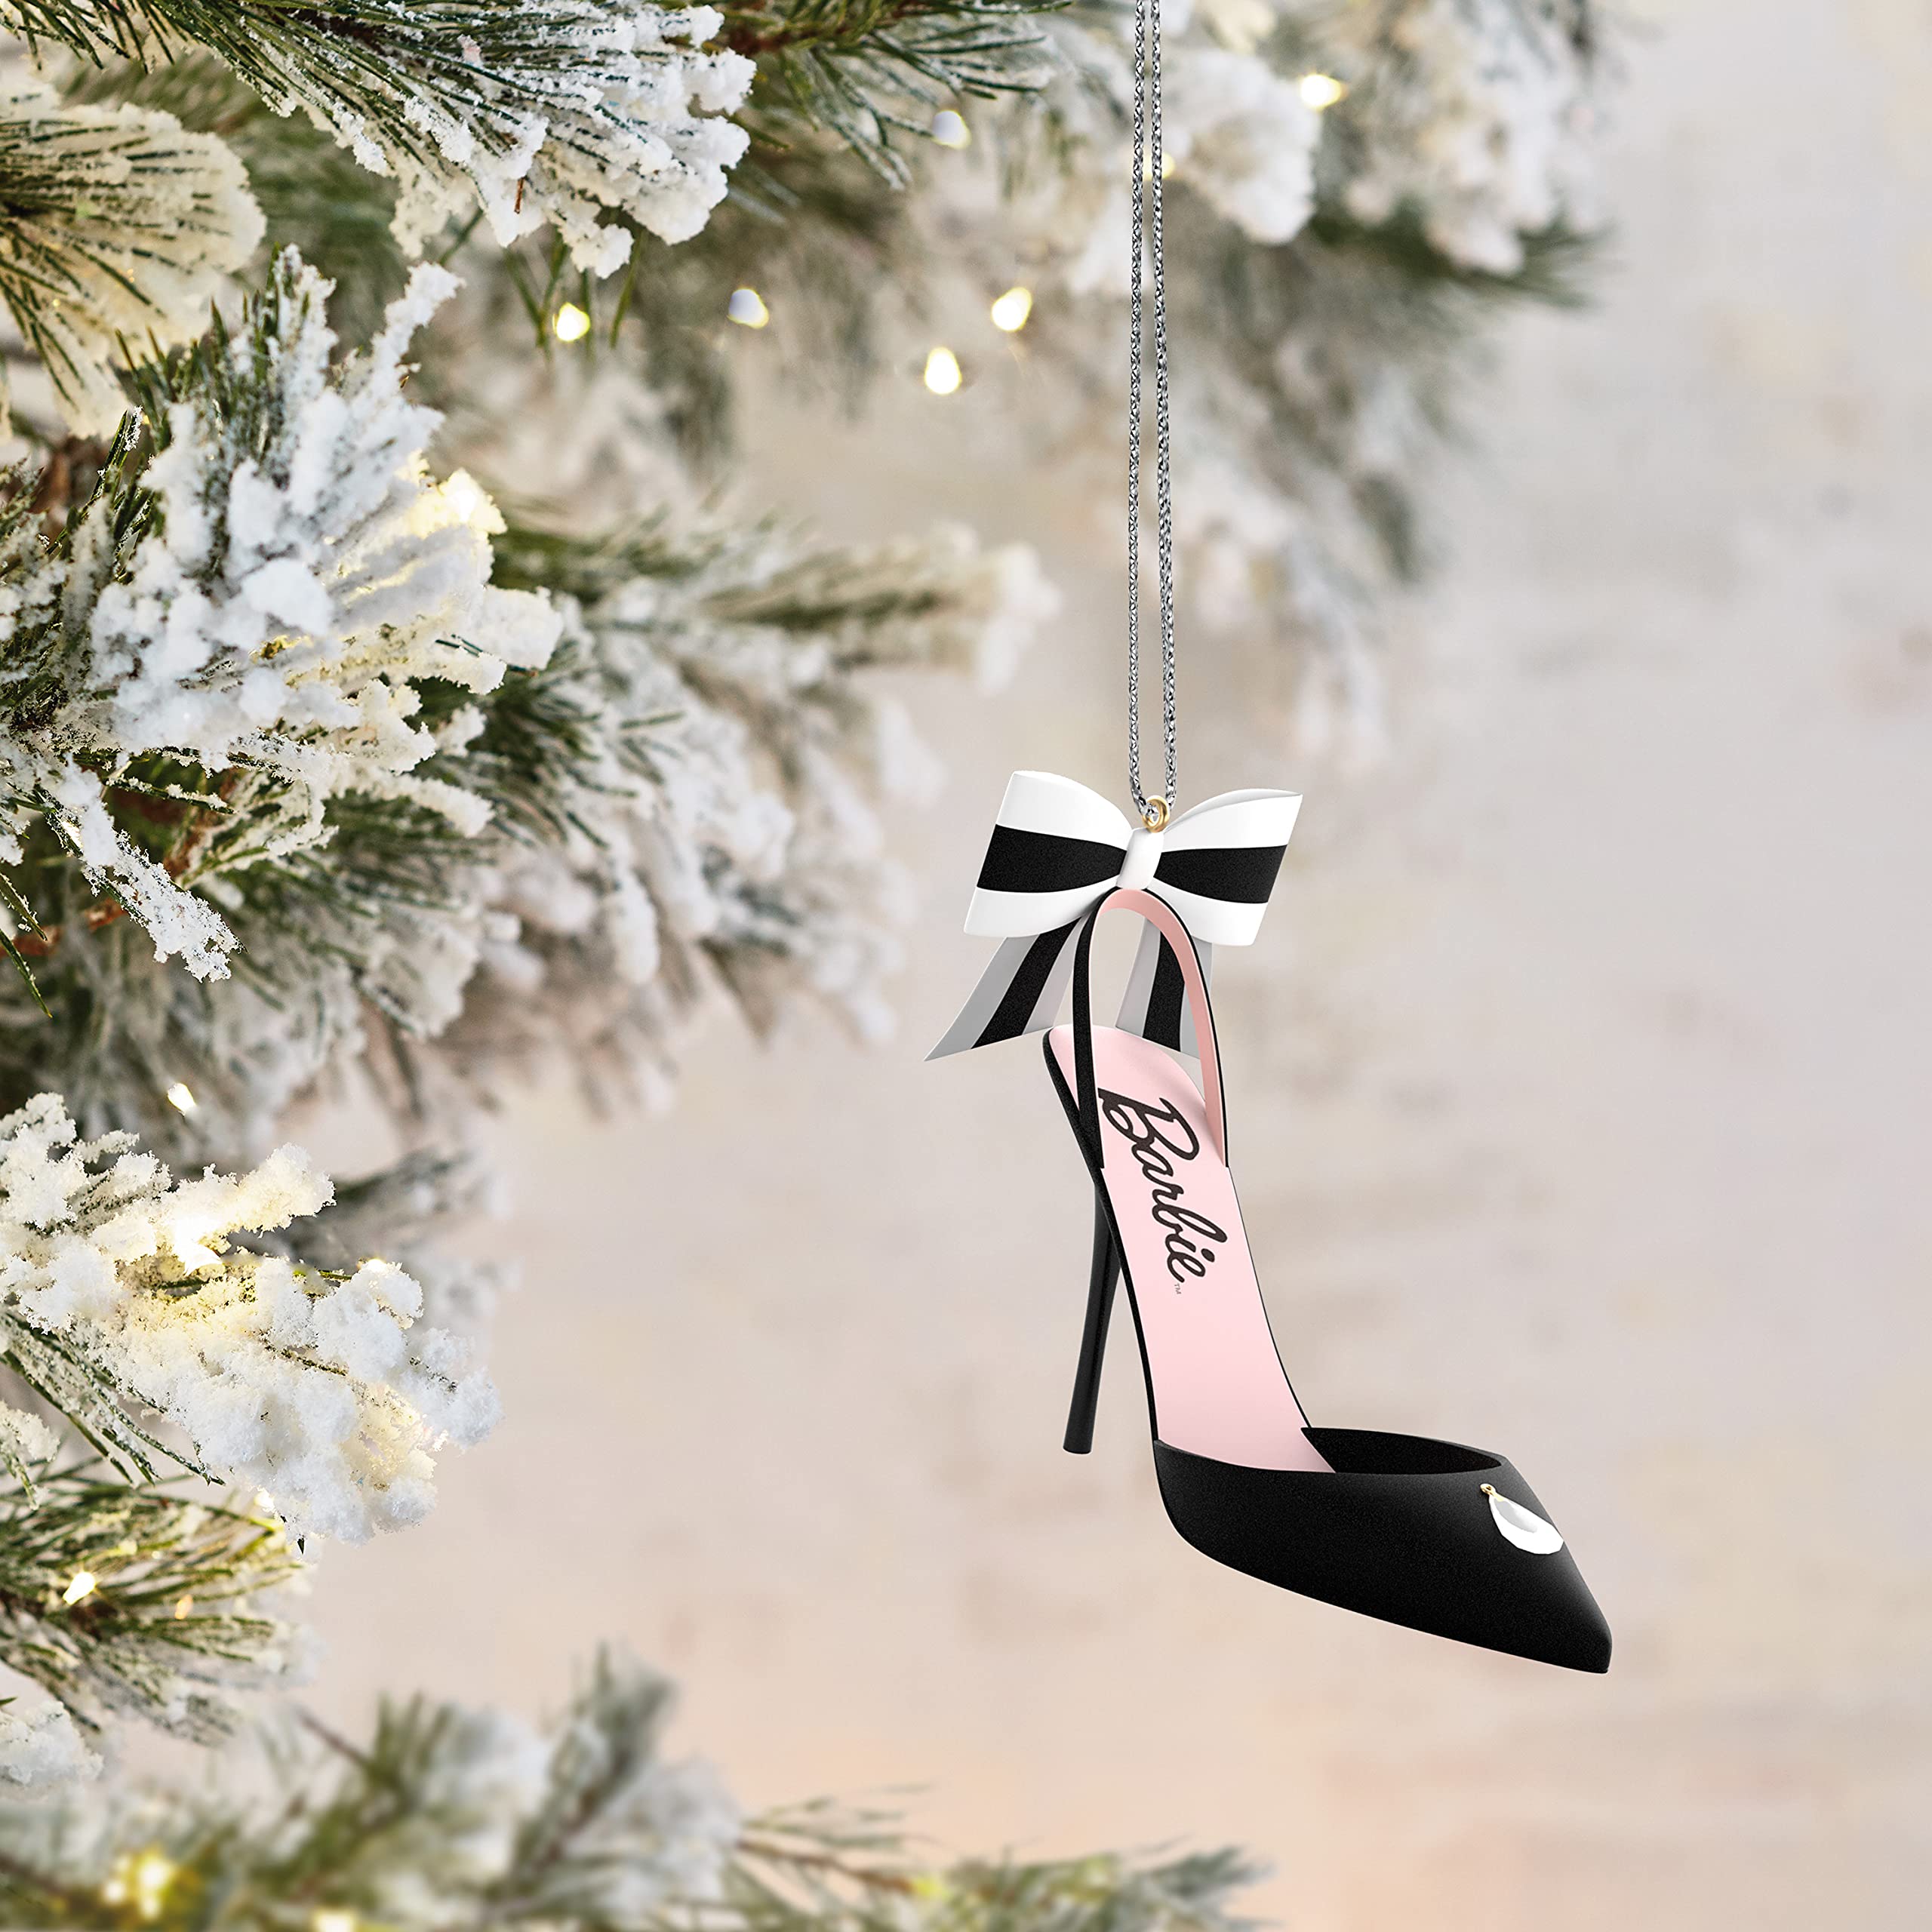 Barbie Shoe-Sational! Special Edition Hallmark Keepsake Christmas Ornament 2021